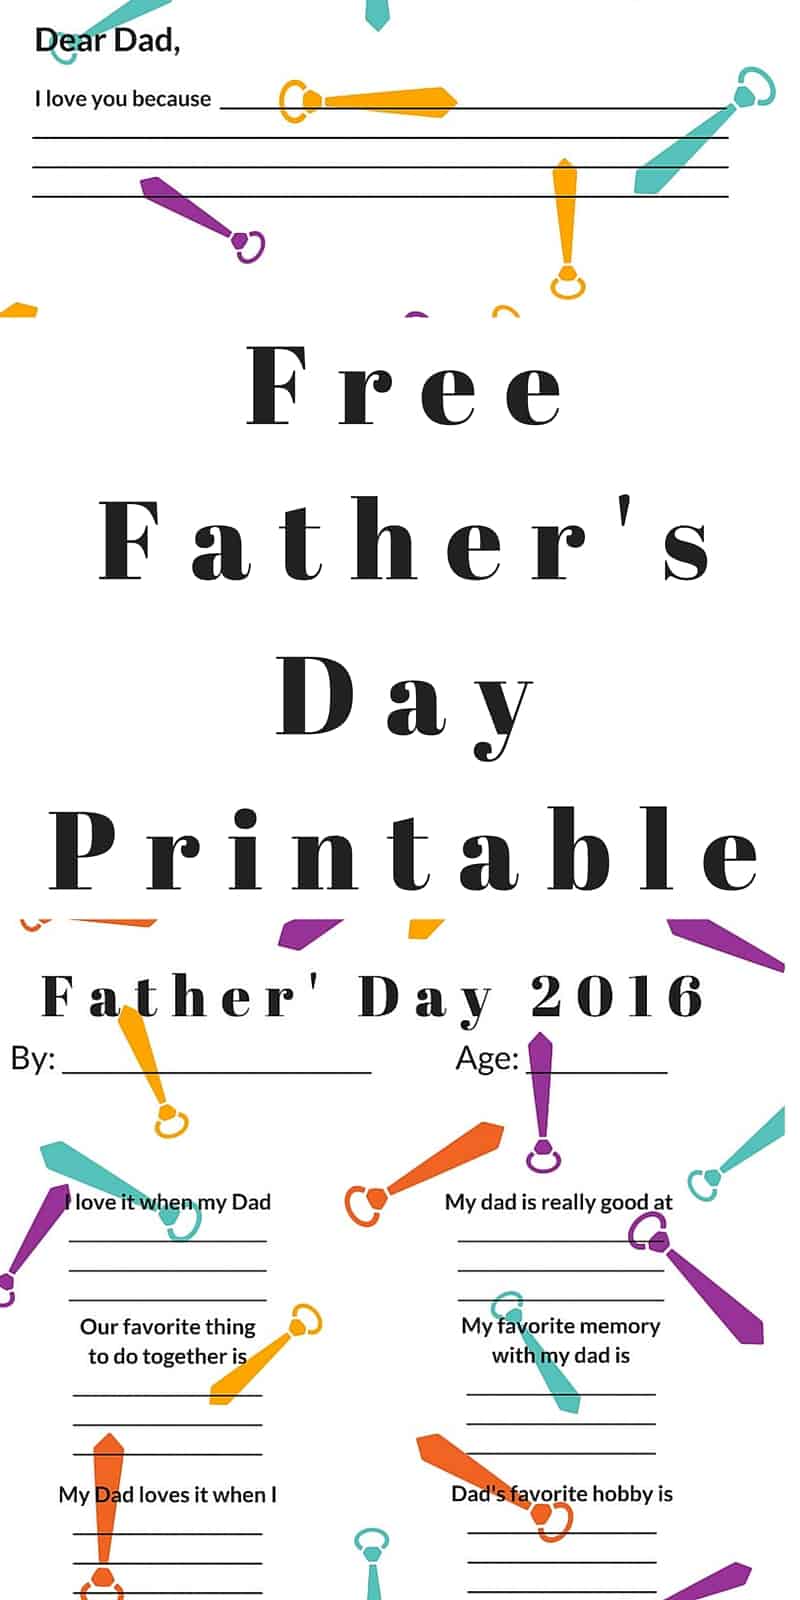 Father's Day 2016 Printable